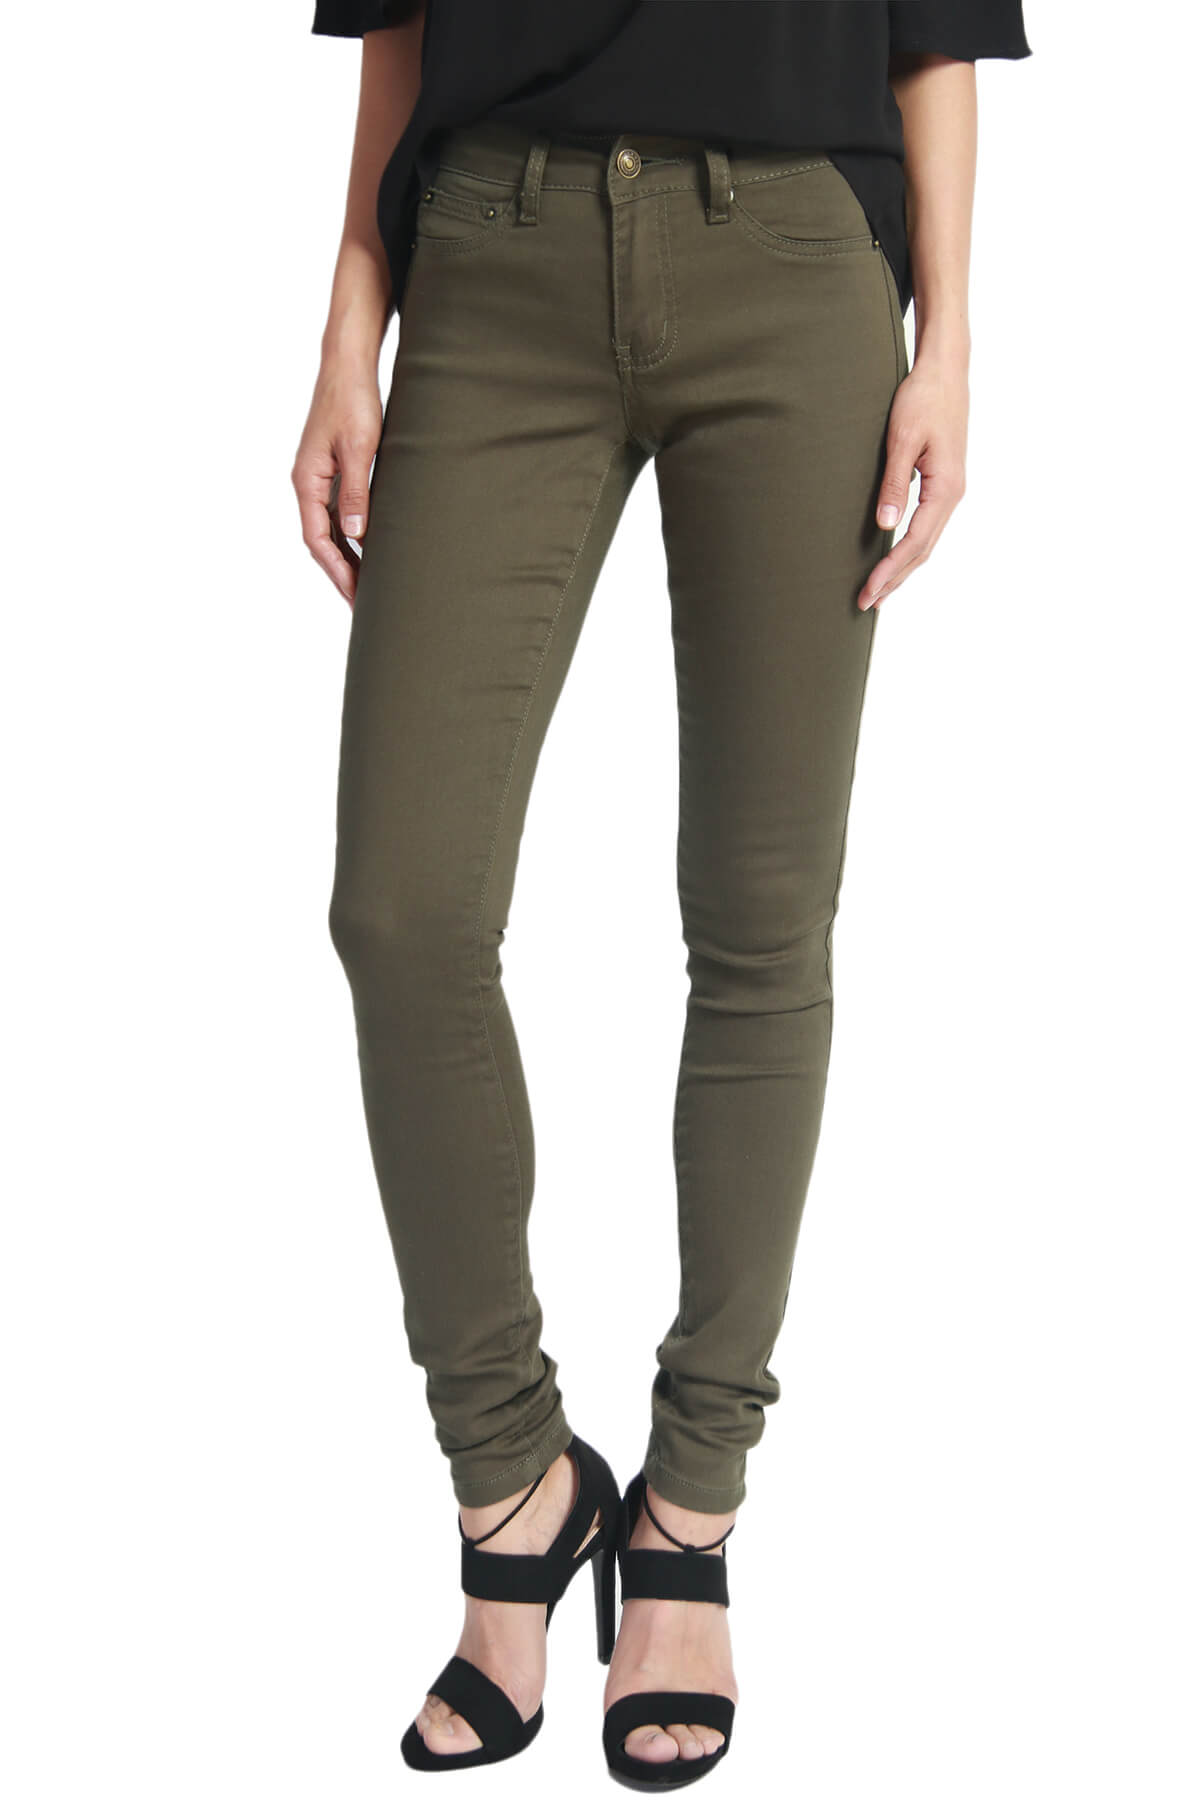 TheMogan Women's Army Olive Green 5 Pocket Stretch Denim Low Rise Skinny Jeans - image 1 of 7